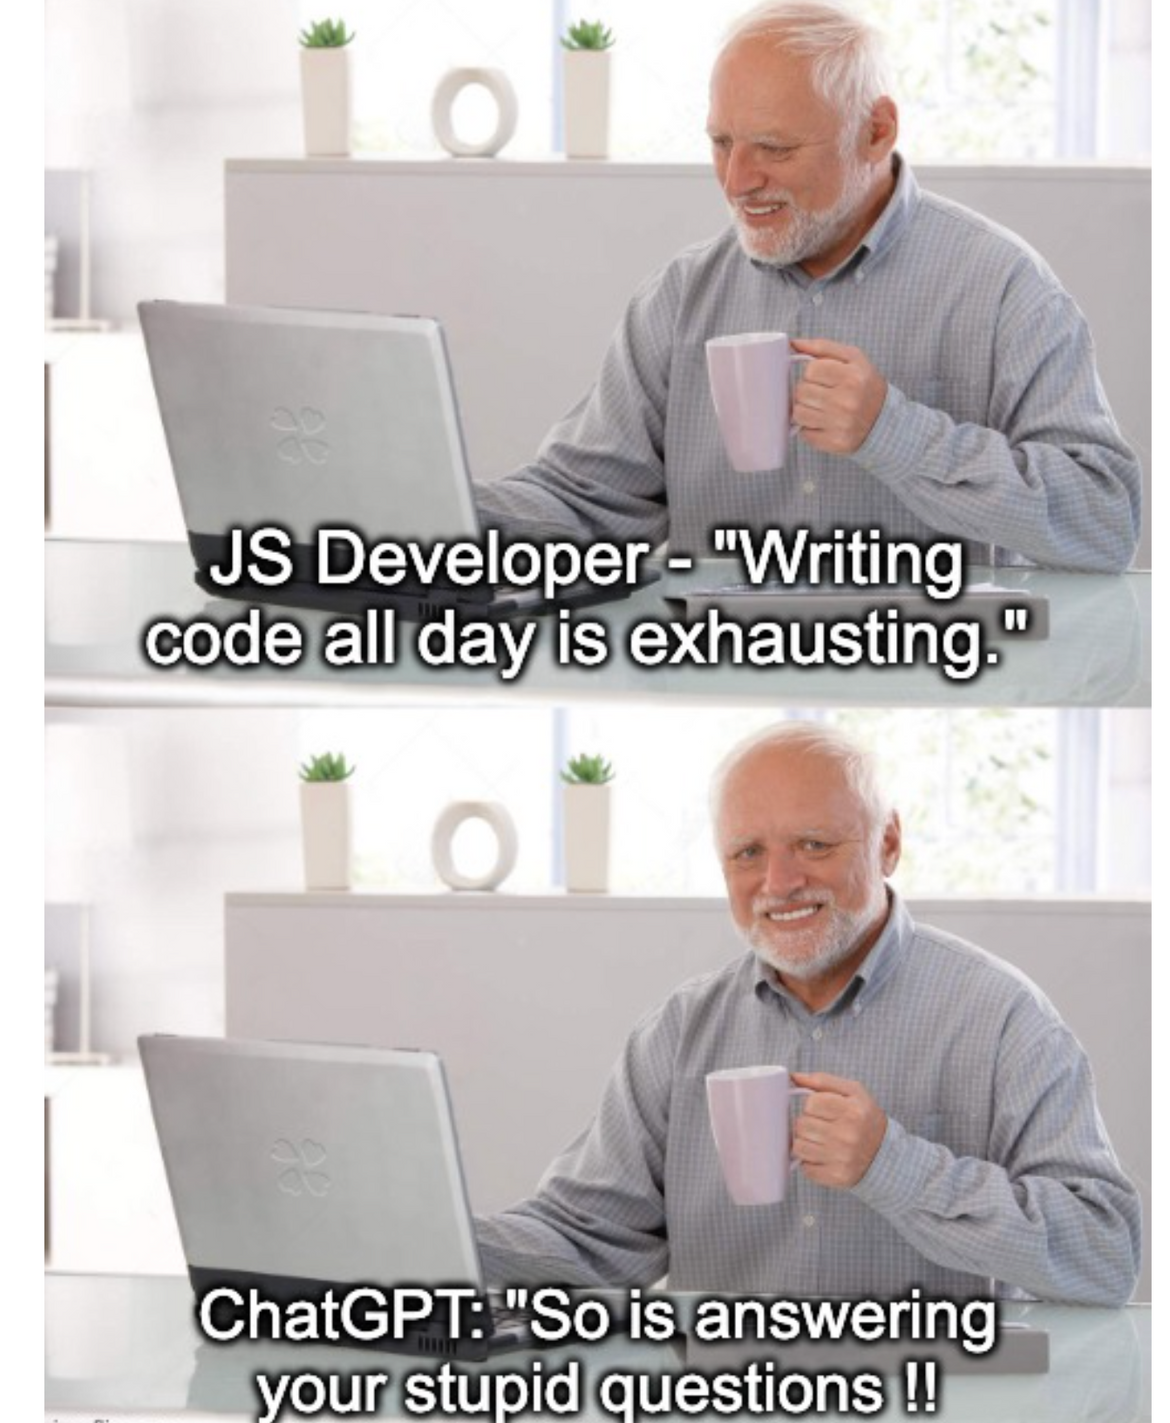 ChatGPT and JS developer